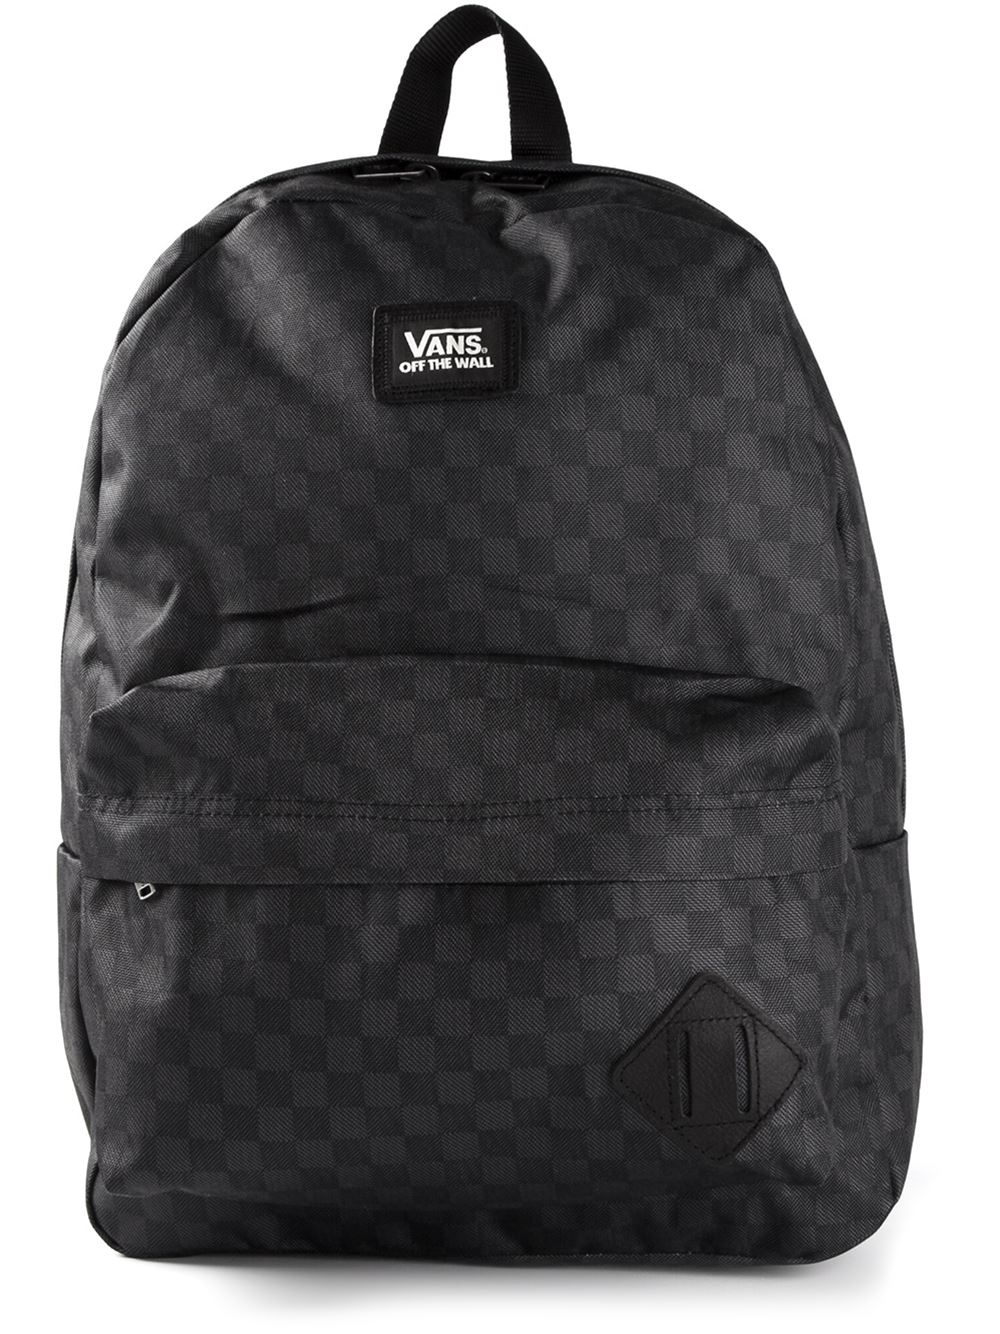 Lyst - Vans Checkered Backpack in Black for Men